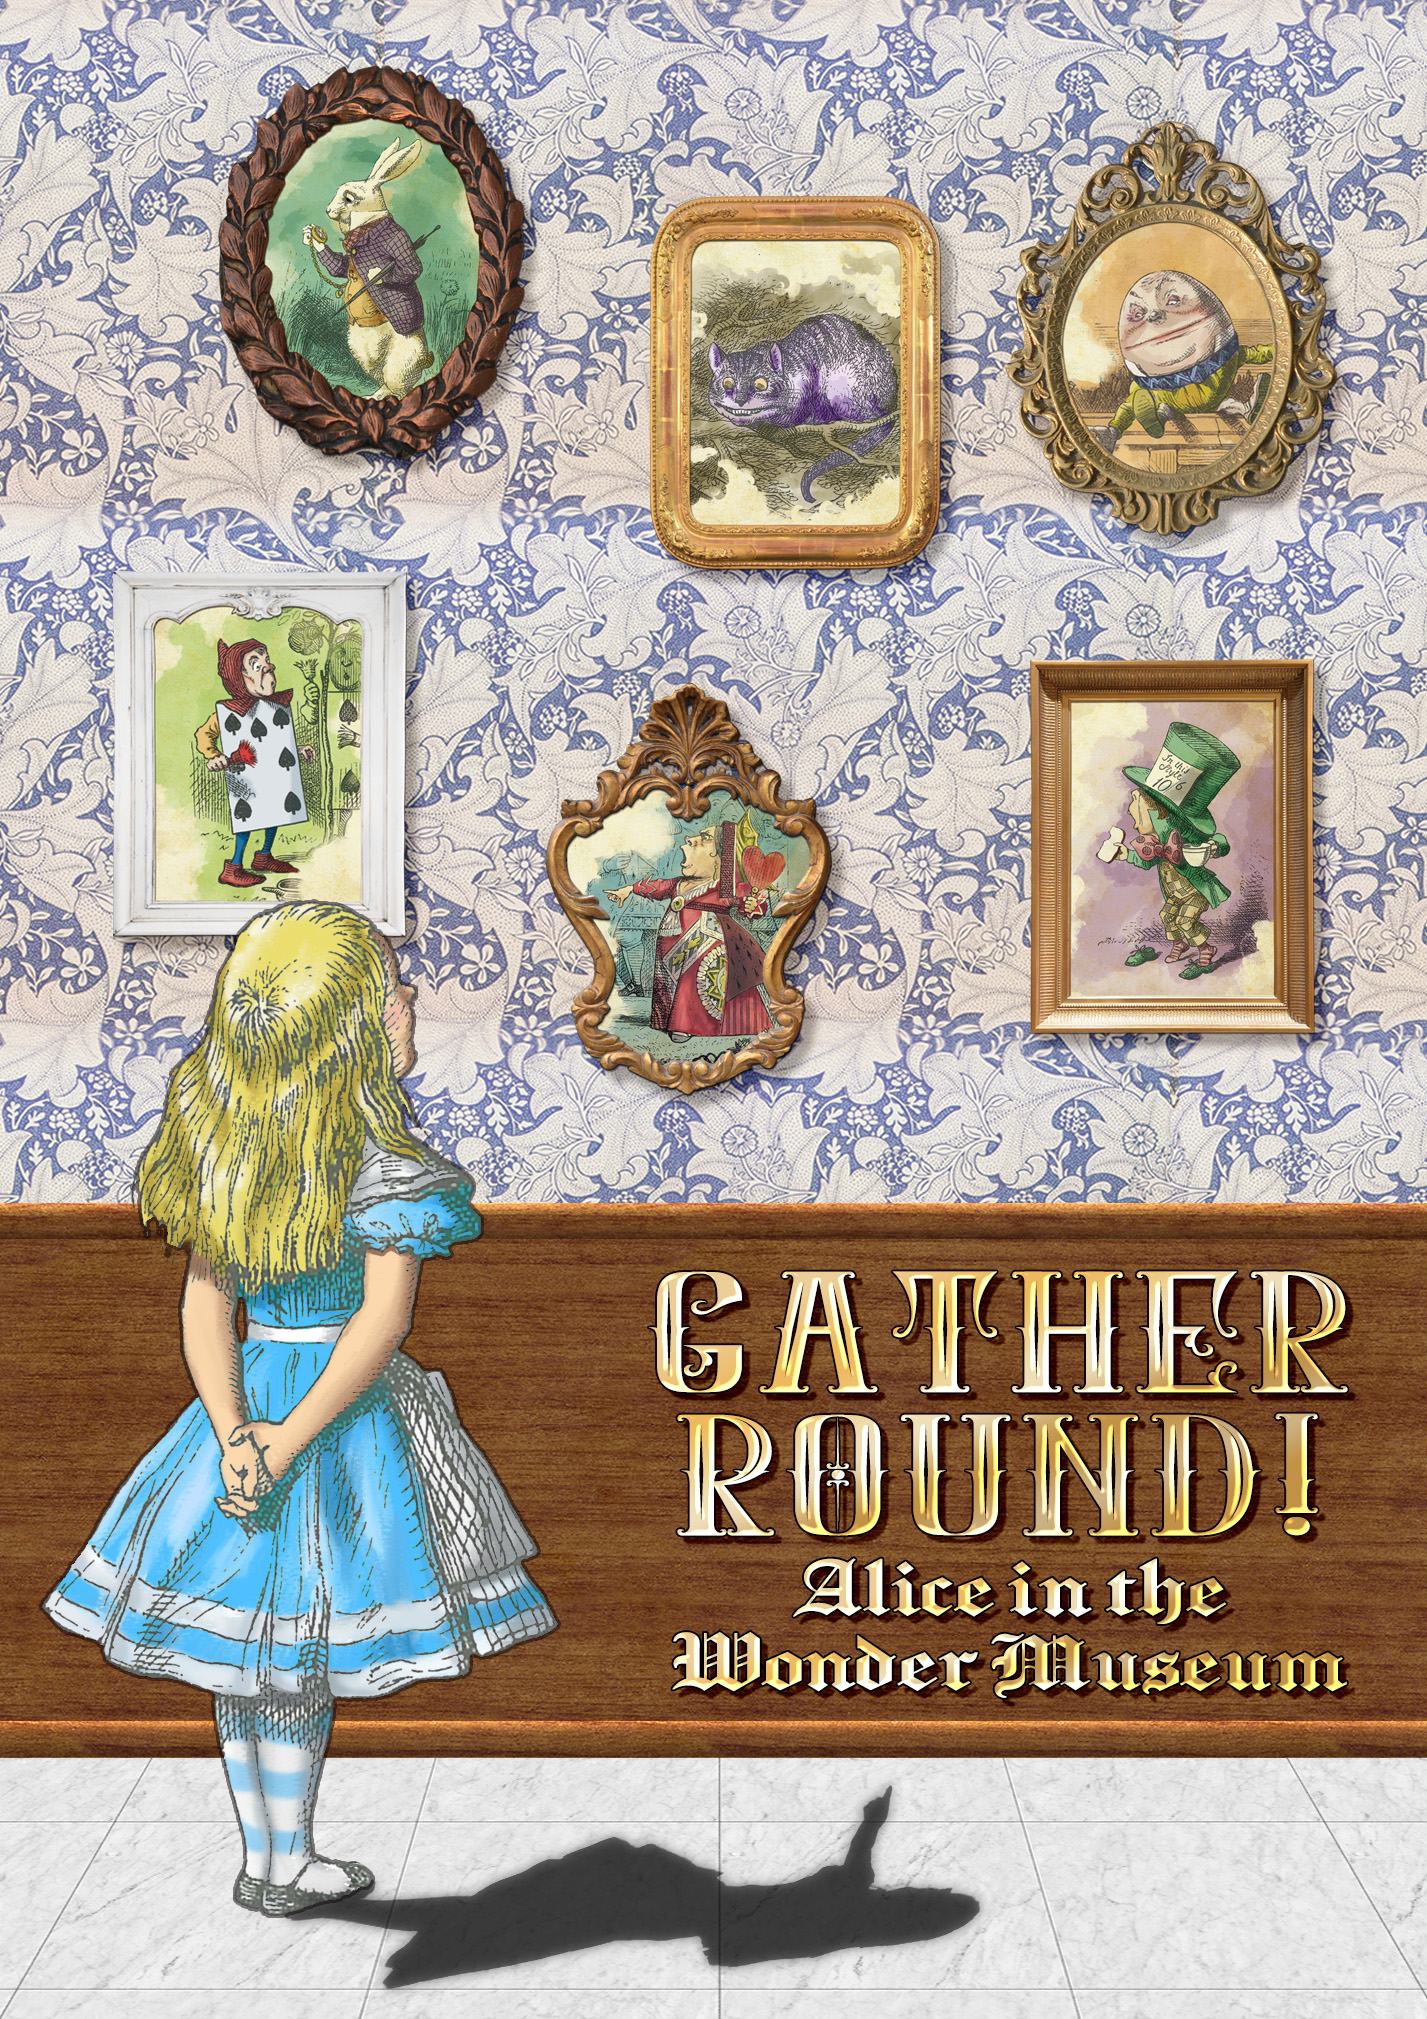 GATHER ROUND Alice in a wonder museun